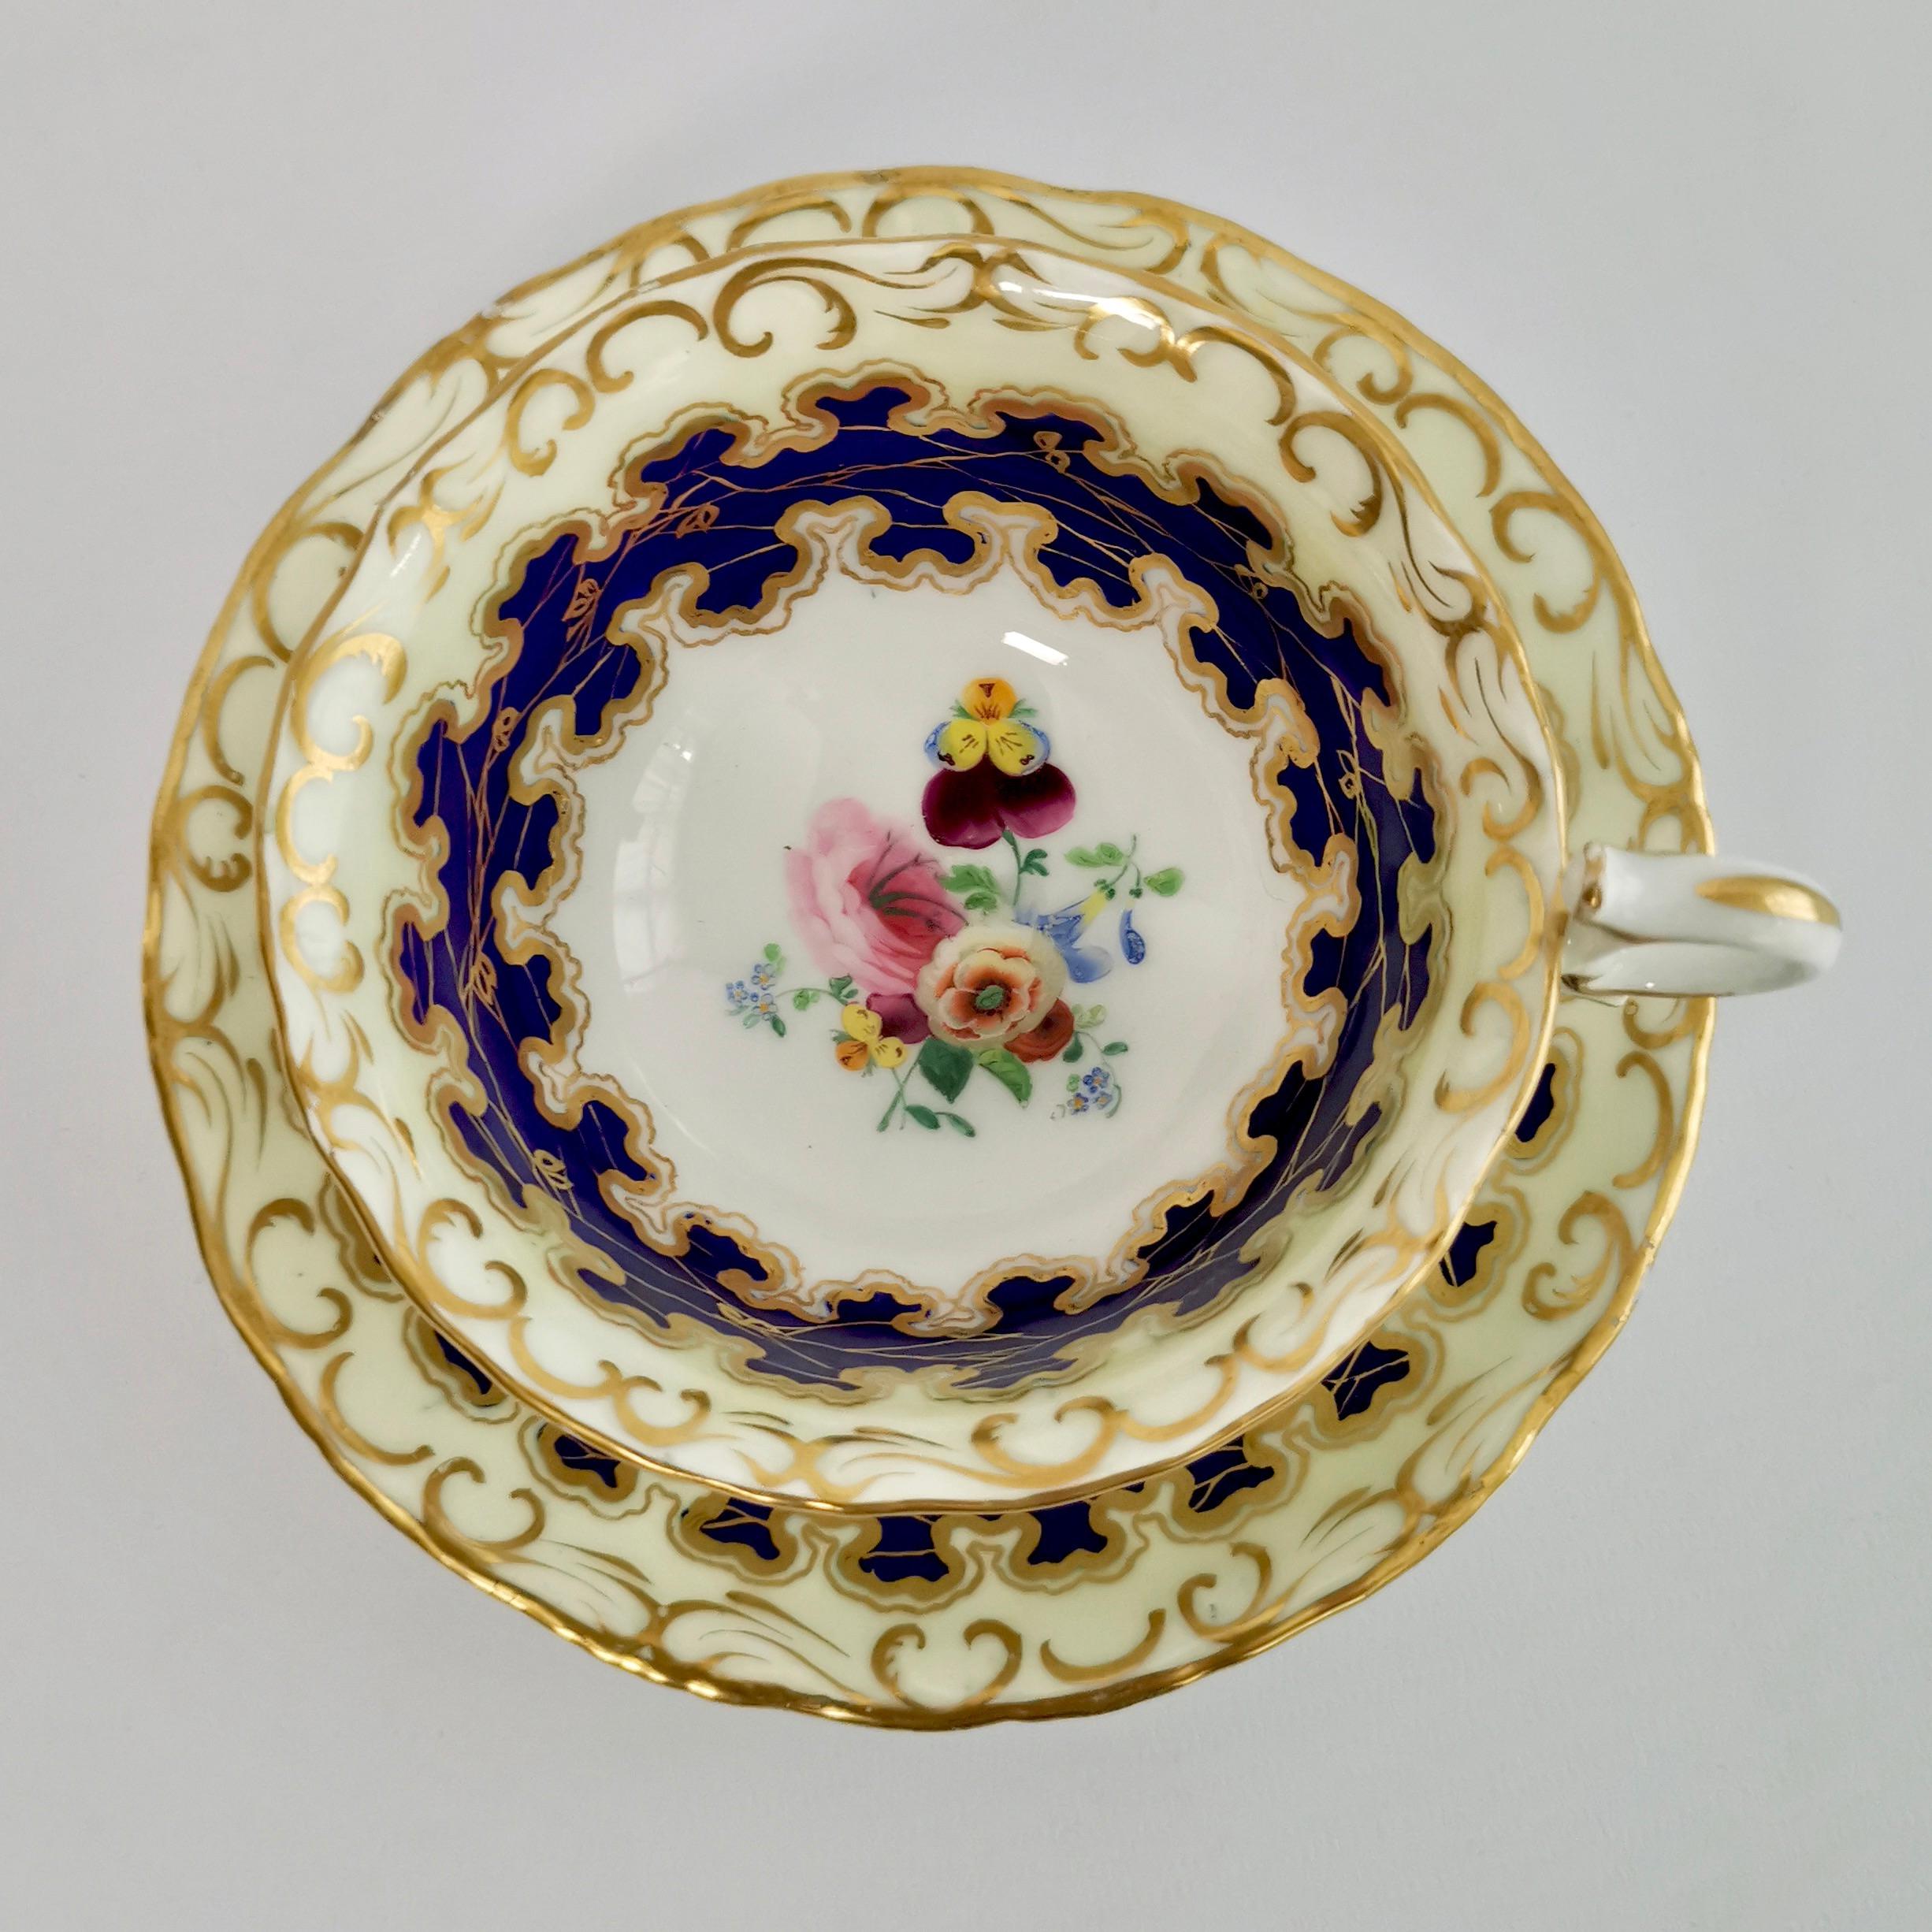 Rococo Revival Grainger Worcester Porcelain Teacup, Cobalt Blue, Gilt and Flowers, circa 1840